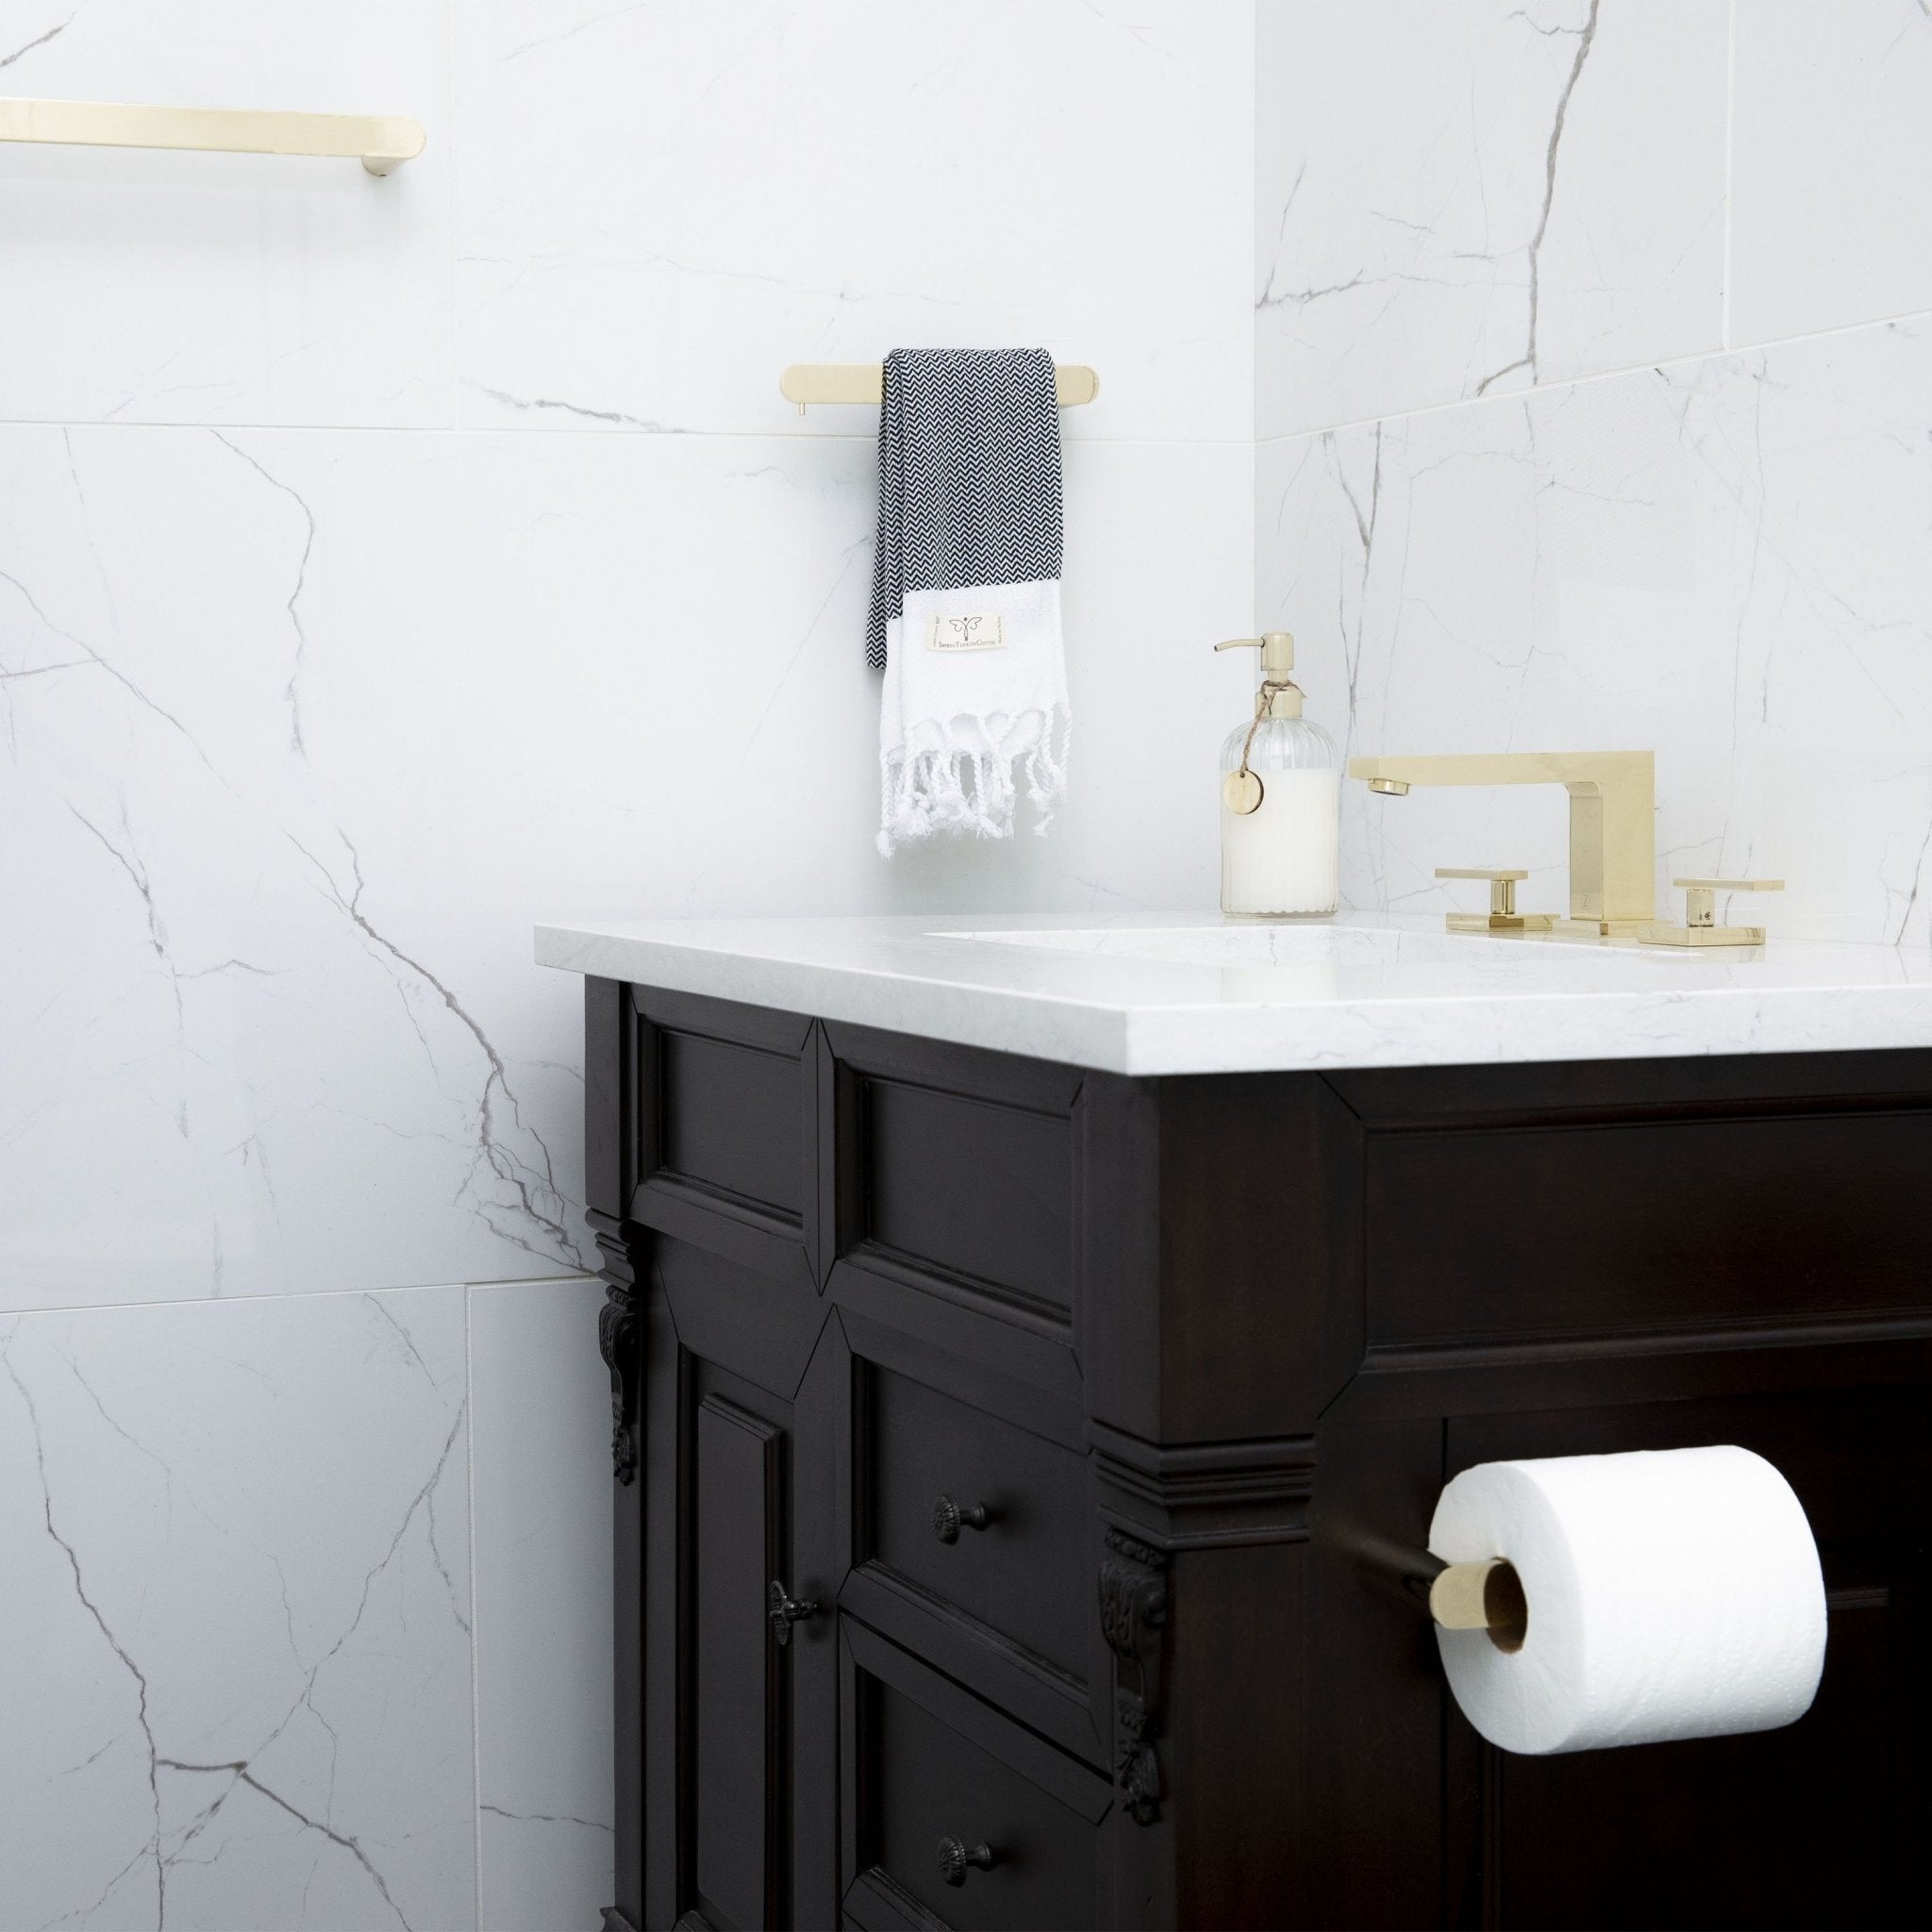 ZLINE Crystal Bay Toilet Paper Holder with Color Options - Rustic Kitchen & Bath - Toilet Paper Holder - ZLINE Kitchen and Bath